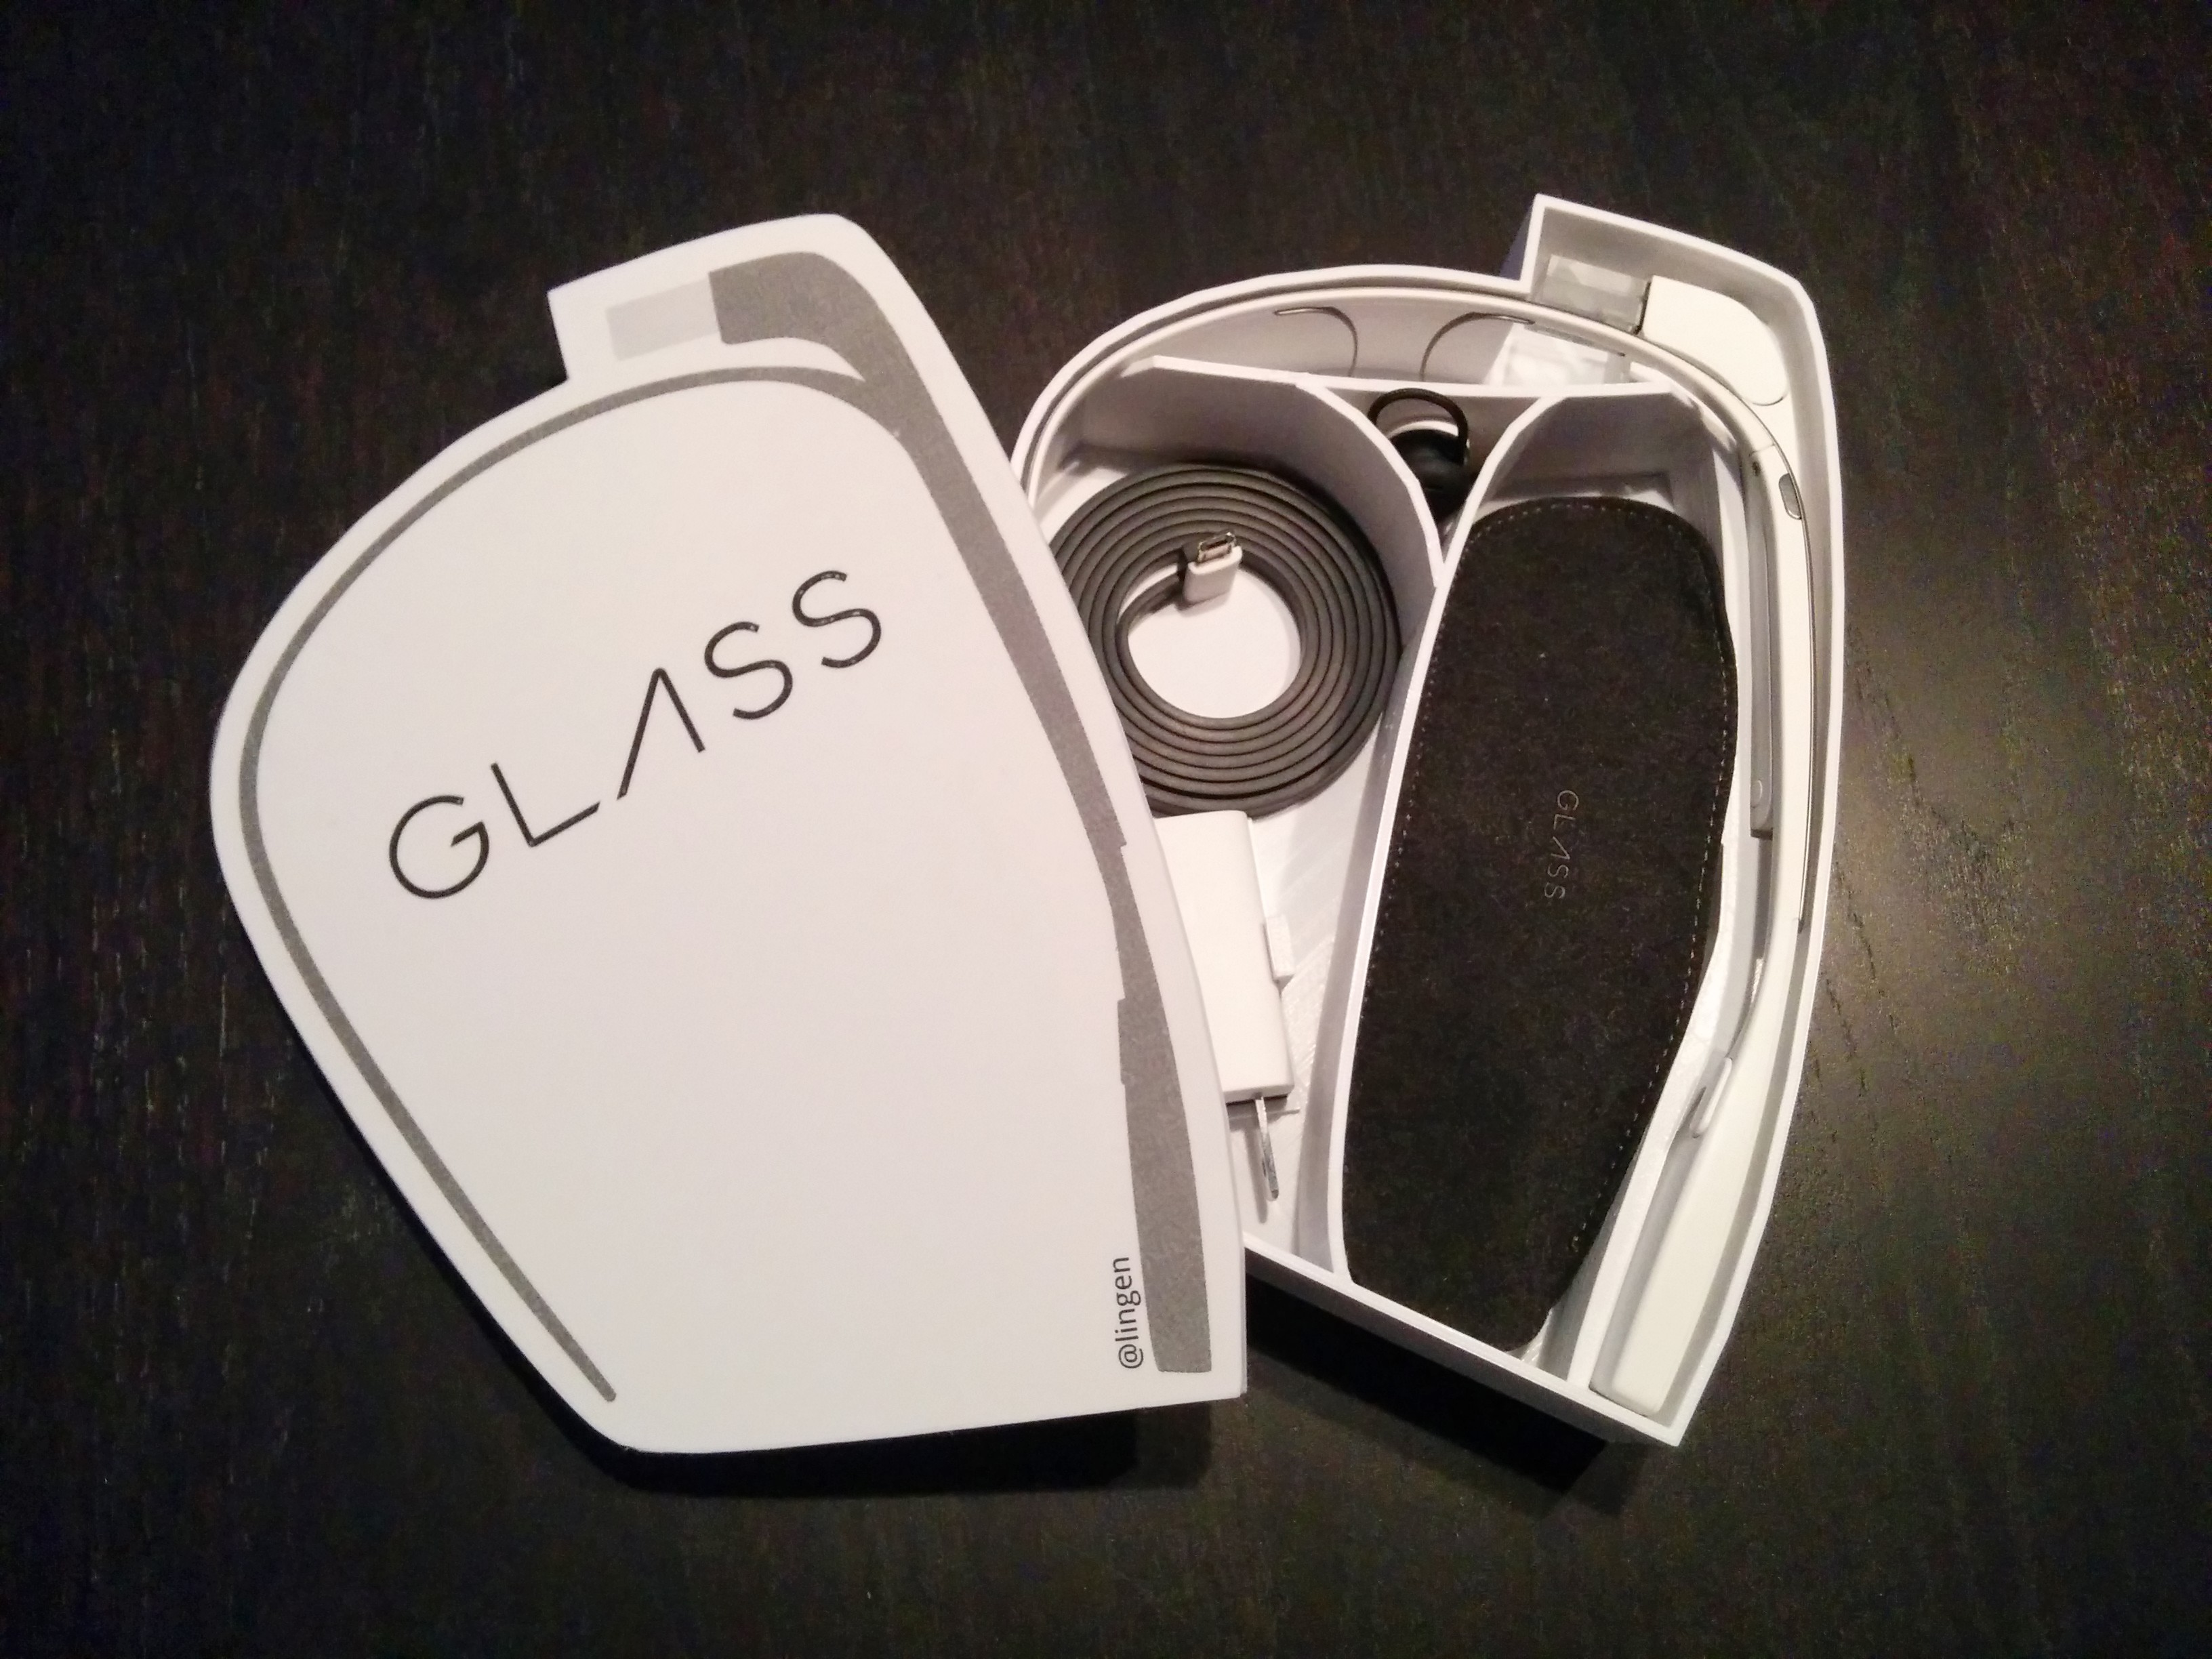 Google Glass Case